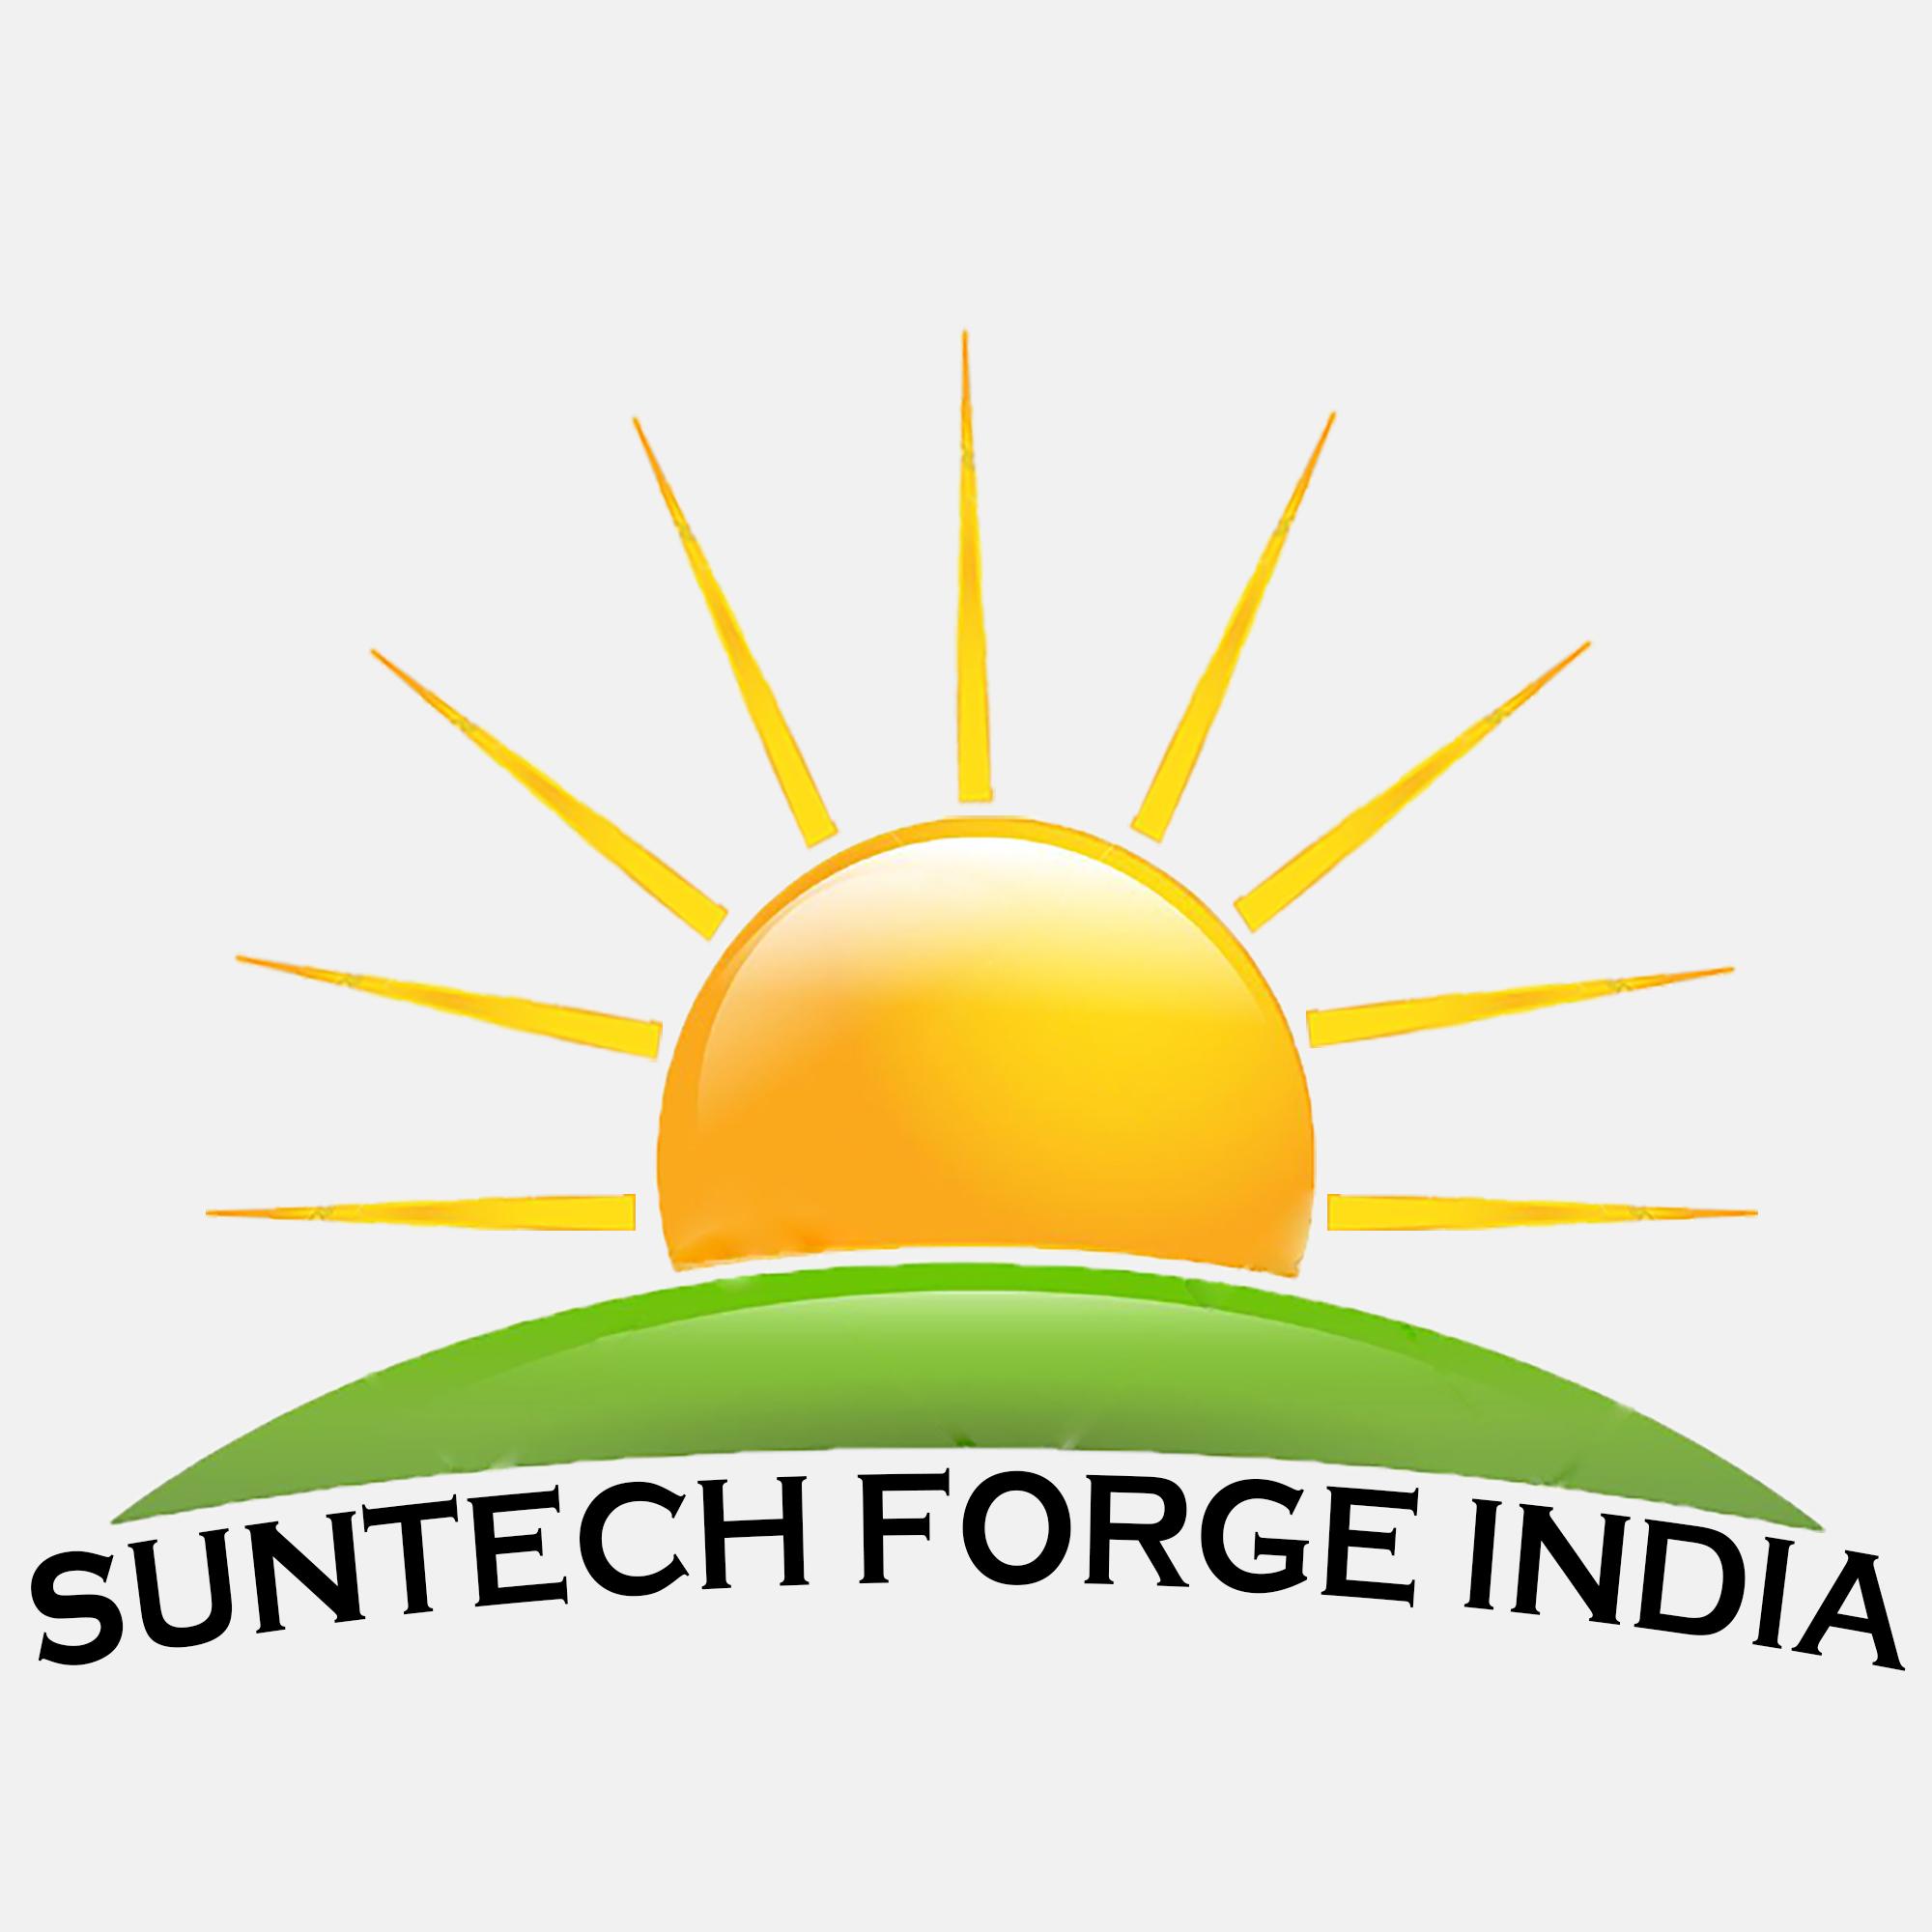 SUNTECH FORGE INDIA